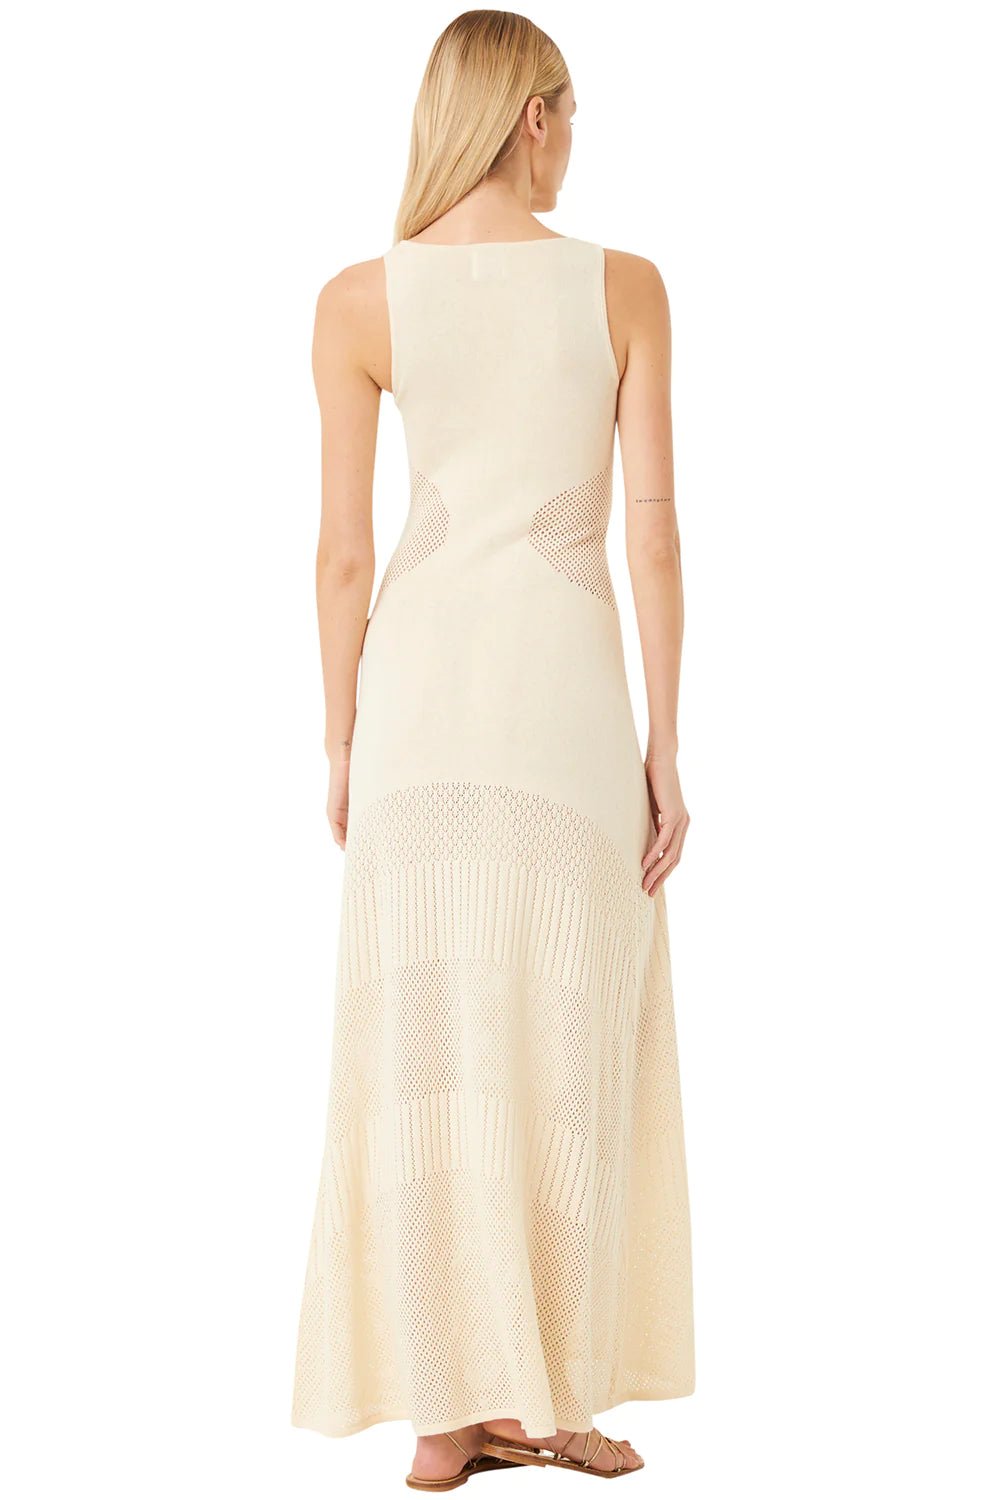 Misa Allison Dress in Ivory - Estilo Boutique